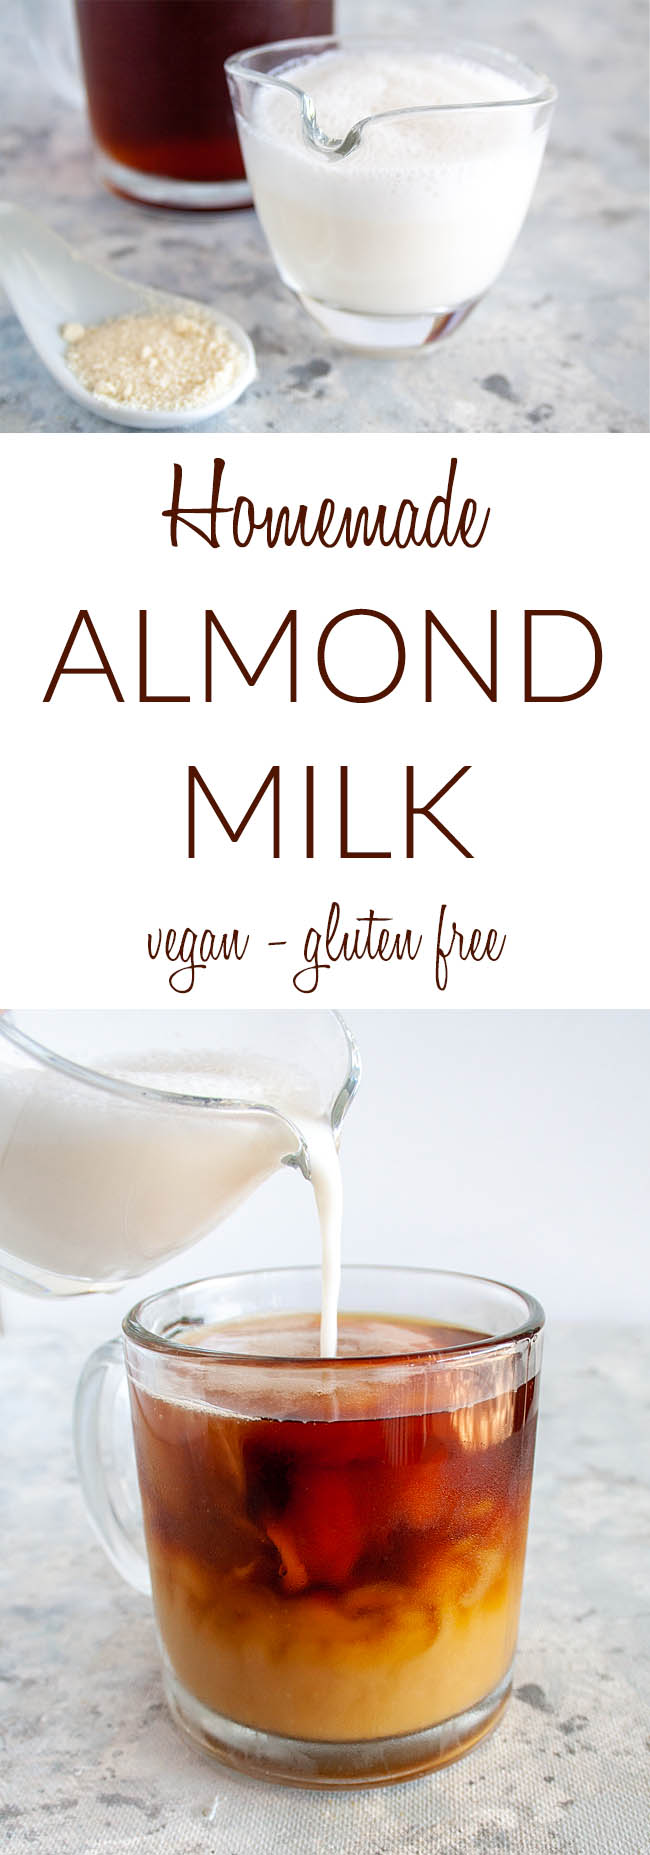 Vegan Almond Milk photo collage with text.